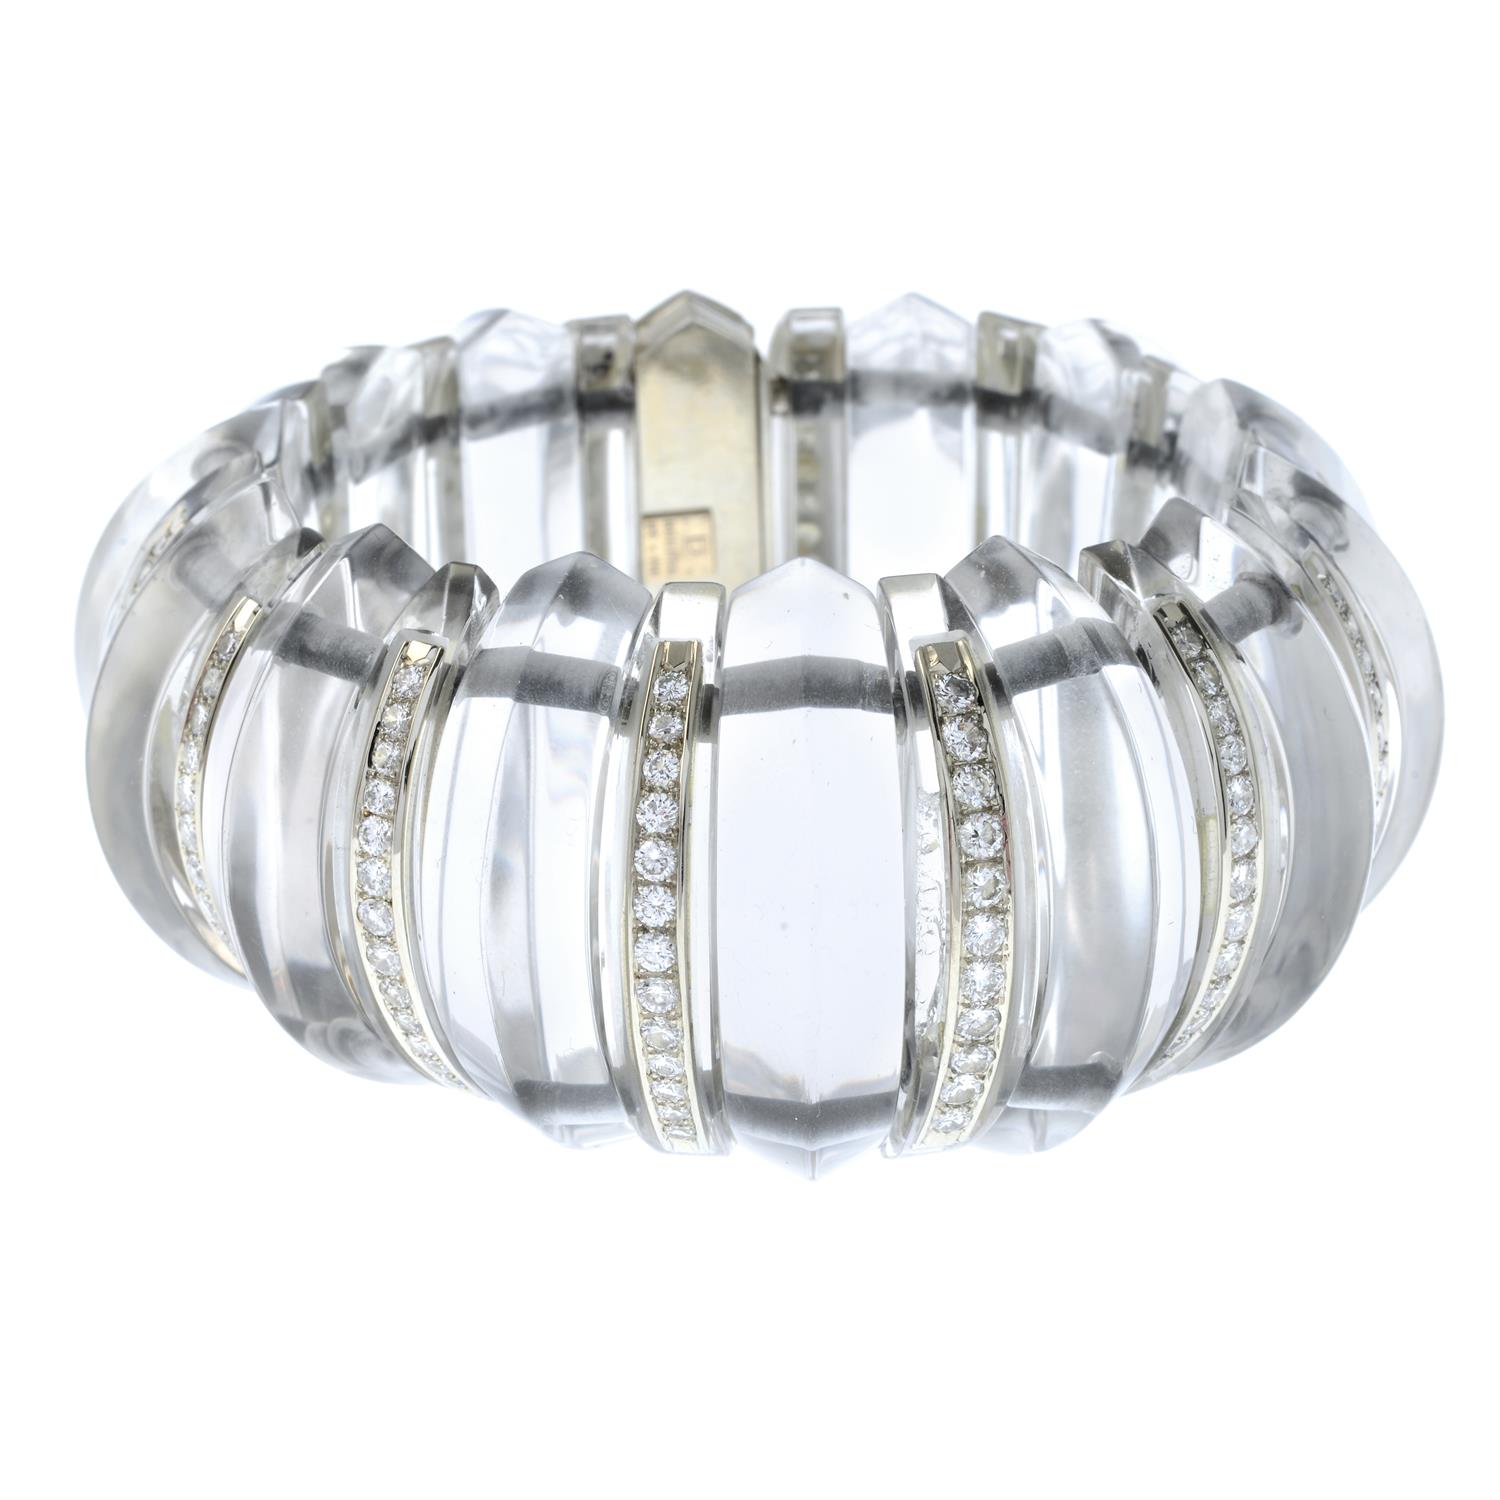 Diamond and rock crystal bracelet, by Demner - Image 2 of 3